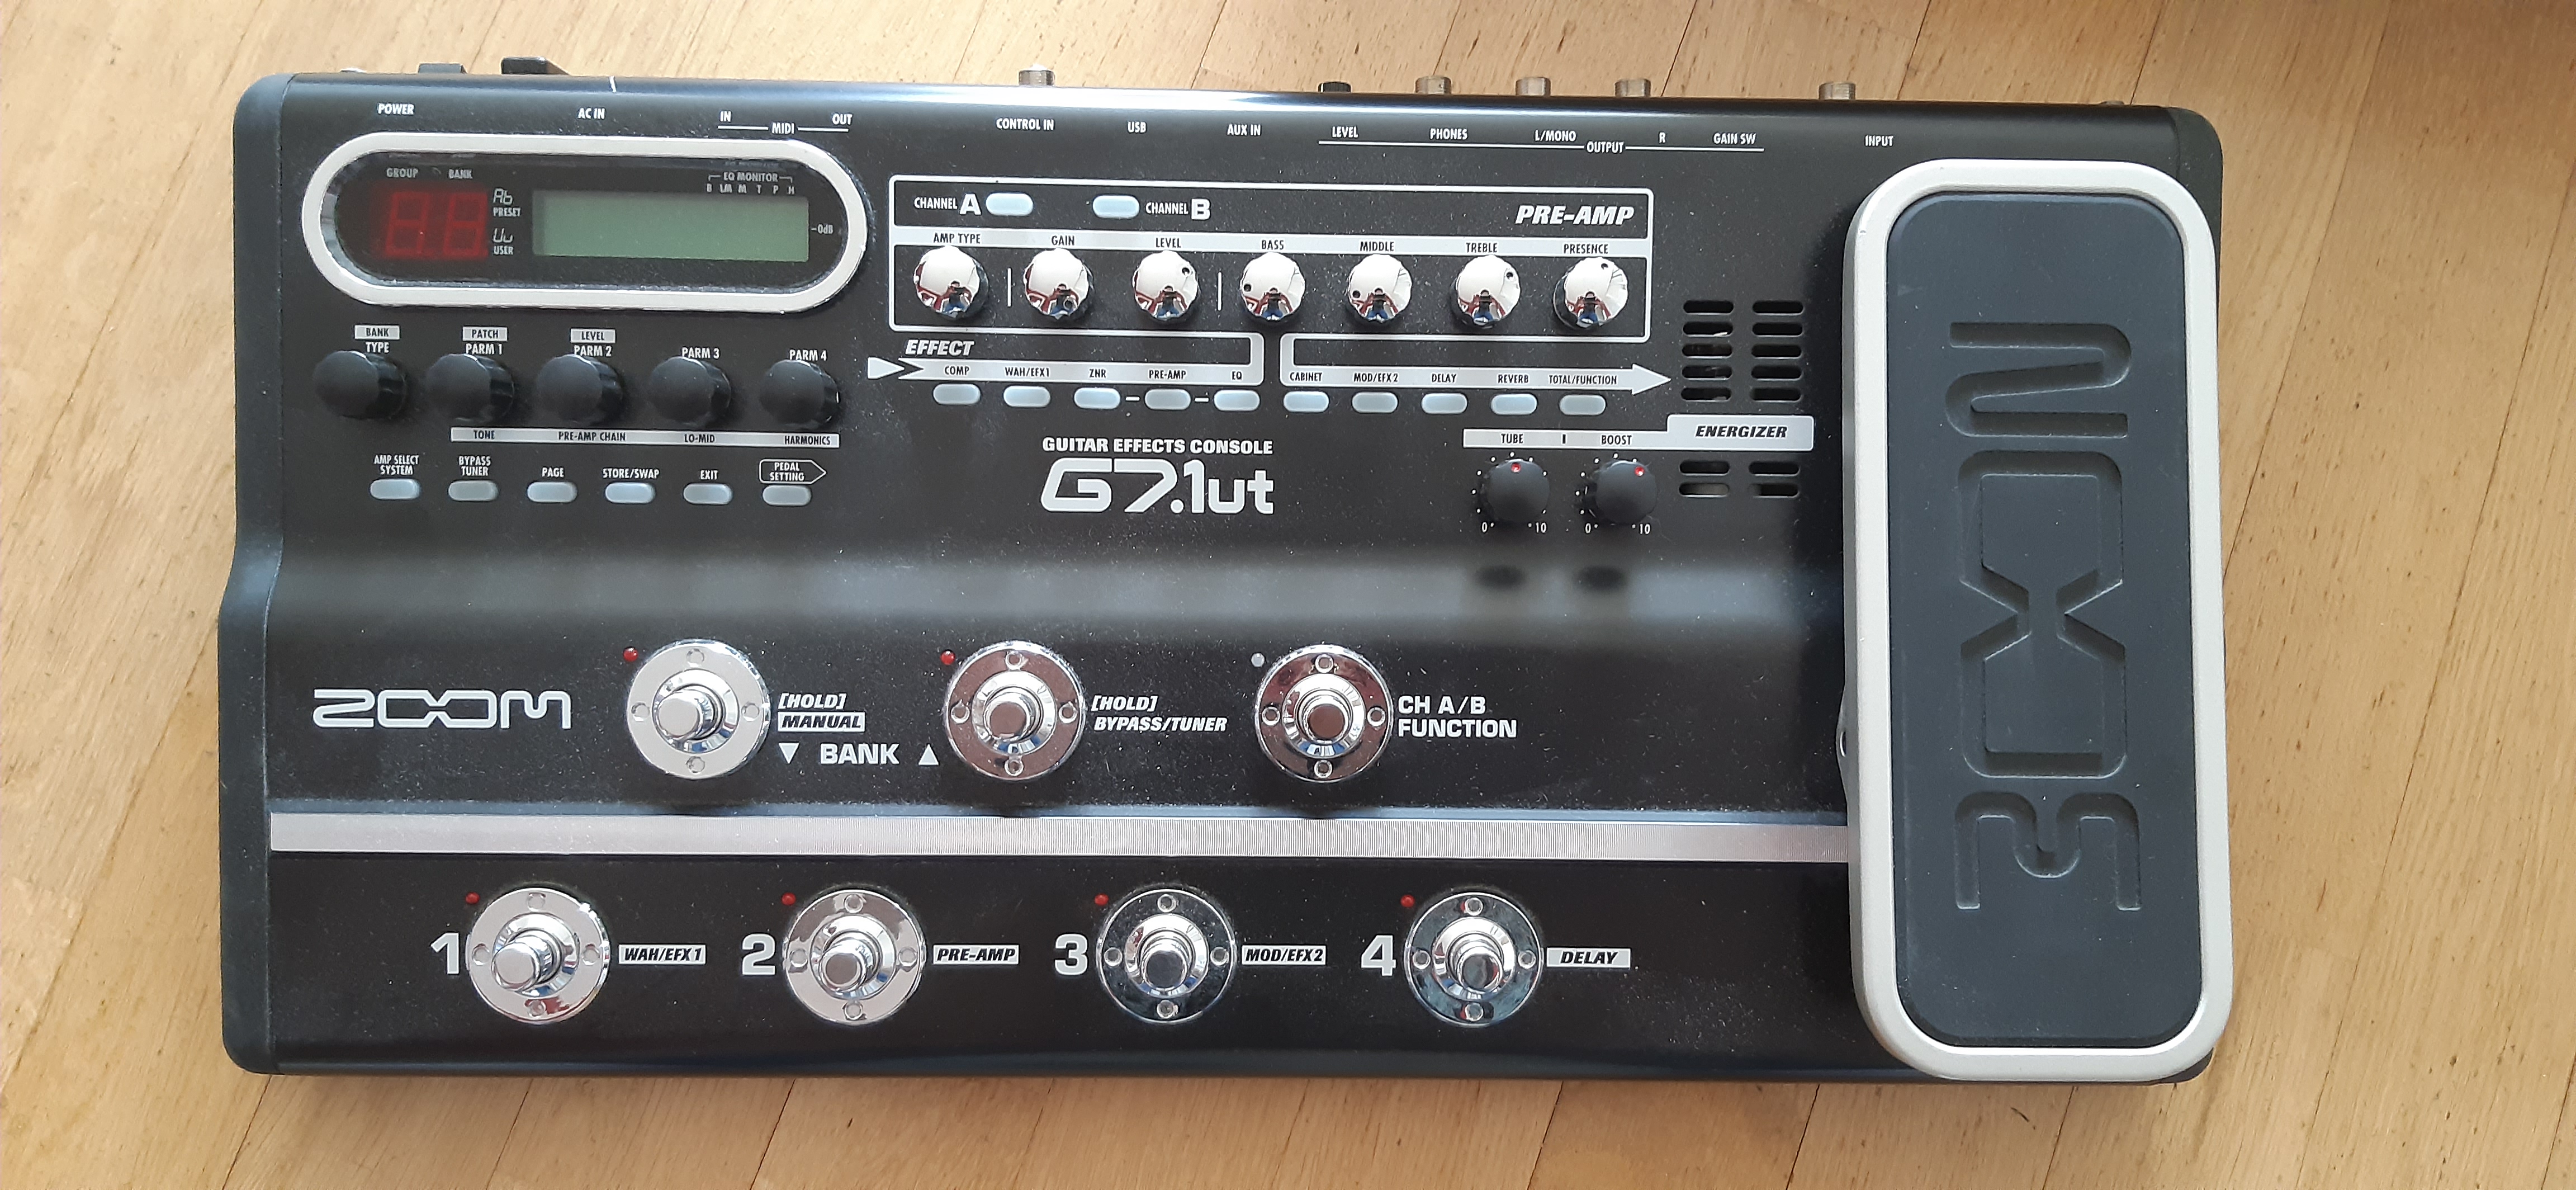 G7.1ut - Zoom G7.1ut - Audiofanzine